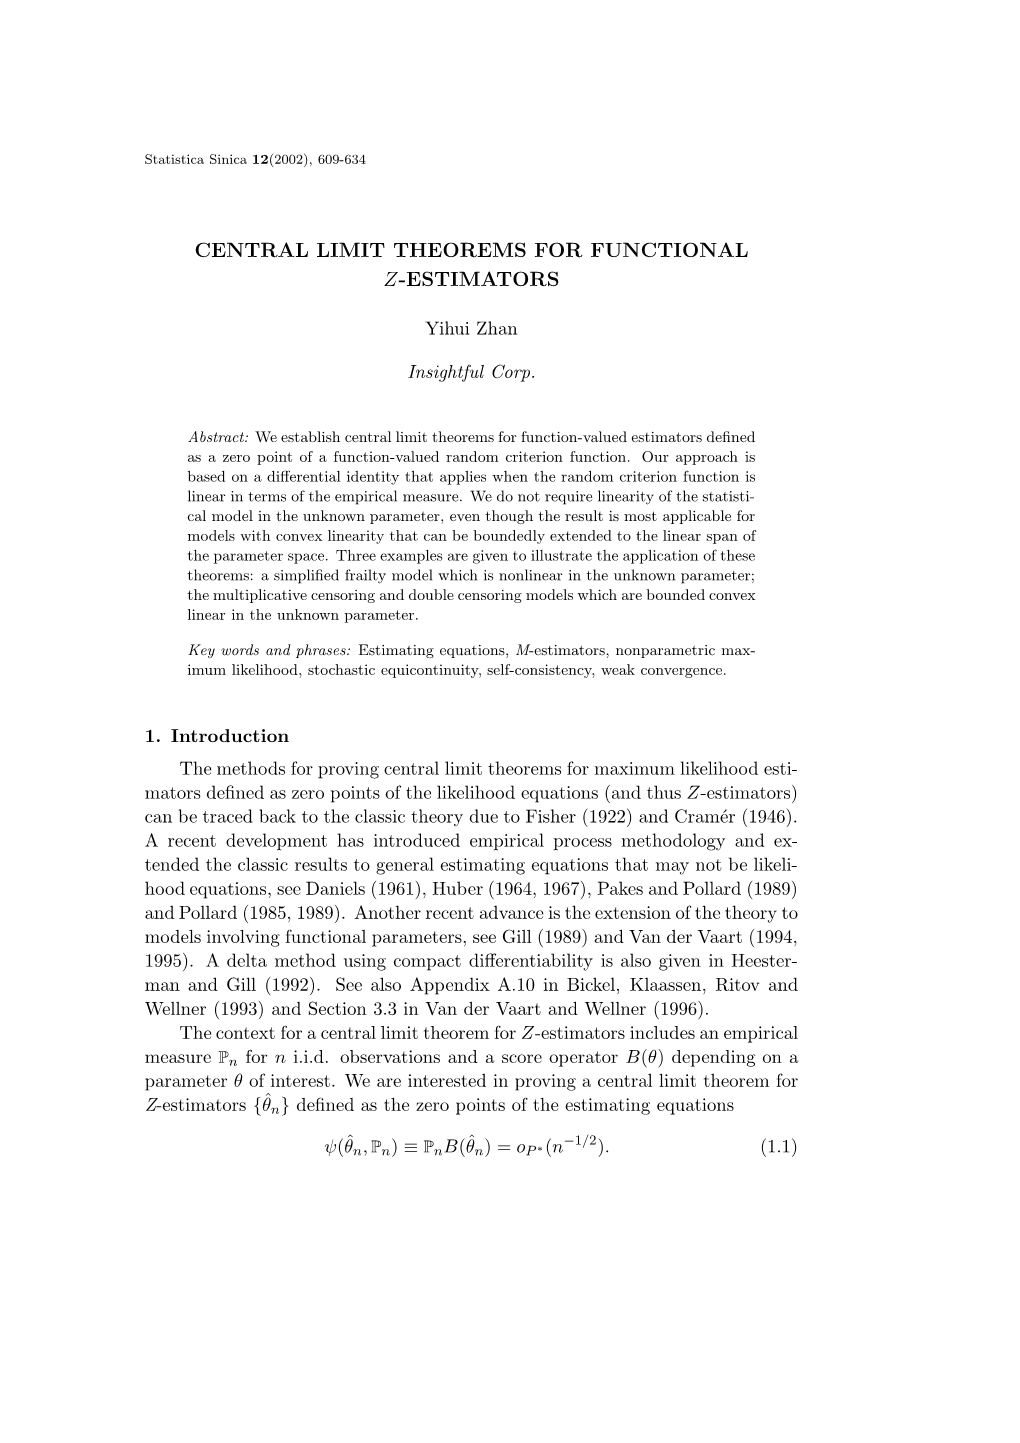 Central Limit Theorems for Functional Z-Estimators